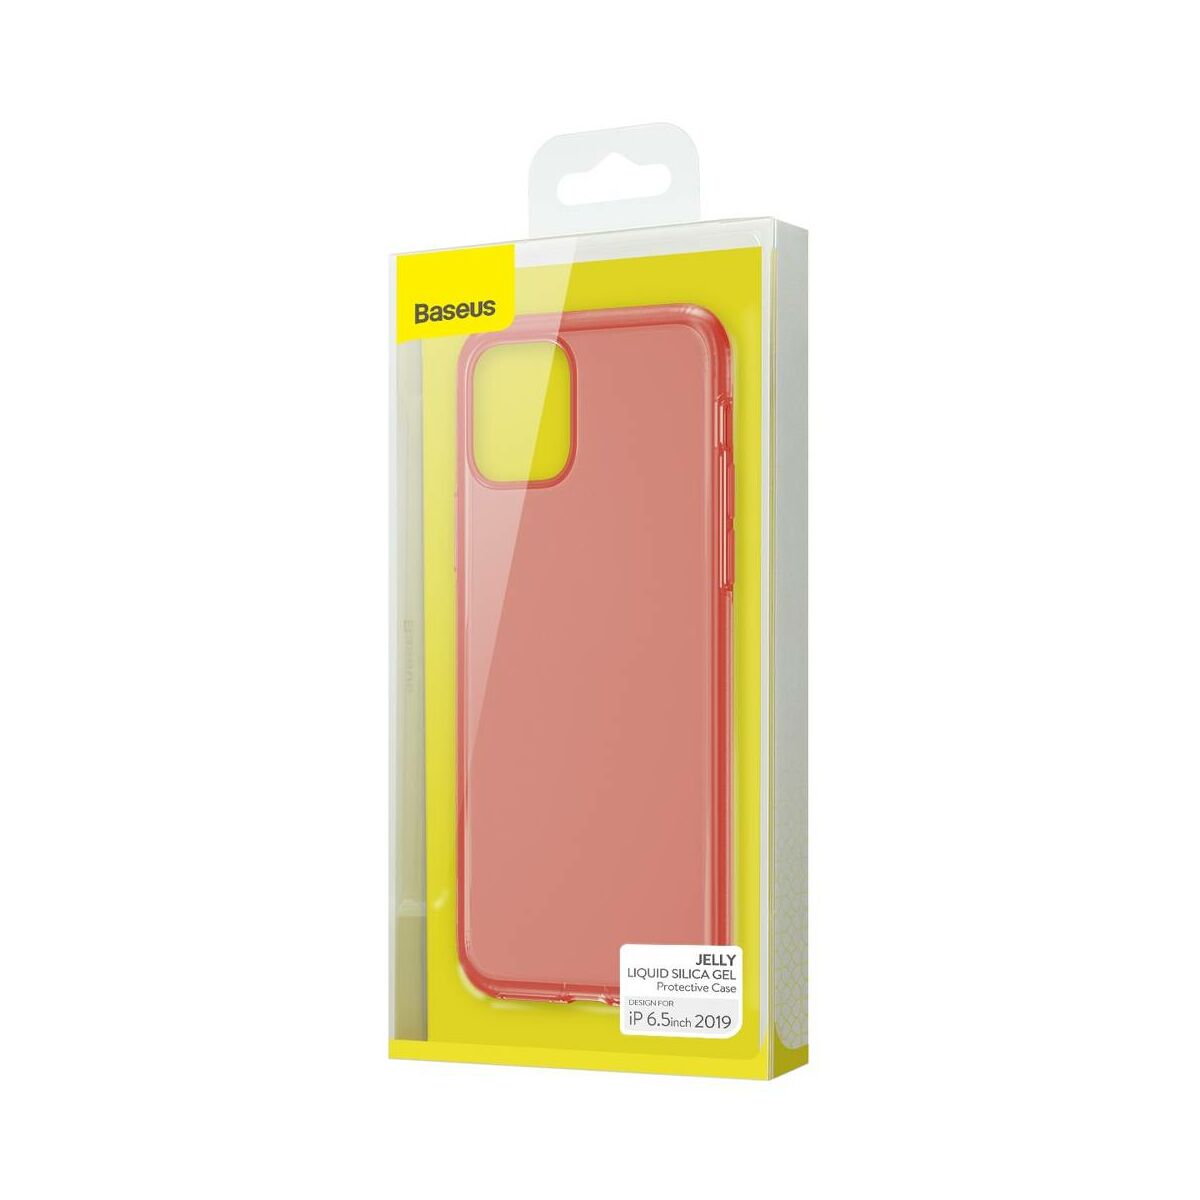 Kép 1/13 - Baseus iPhone 11 Pro Max tok, Jelly Liquid Silica Gel Protective, átlátszó piros (WIAPIPH65S-GD09)